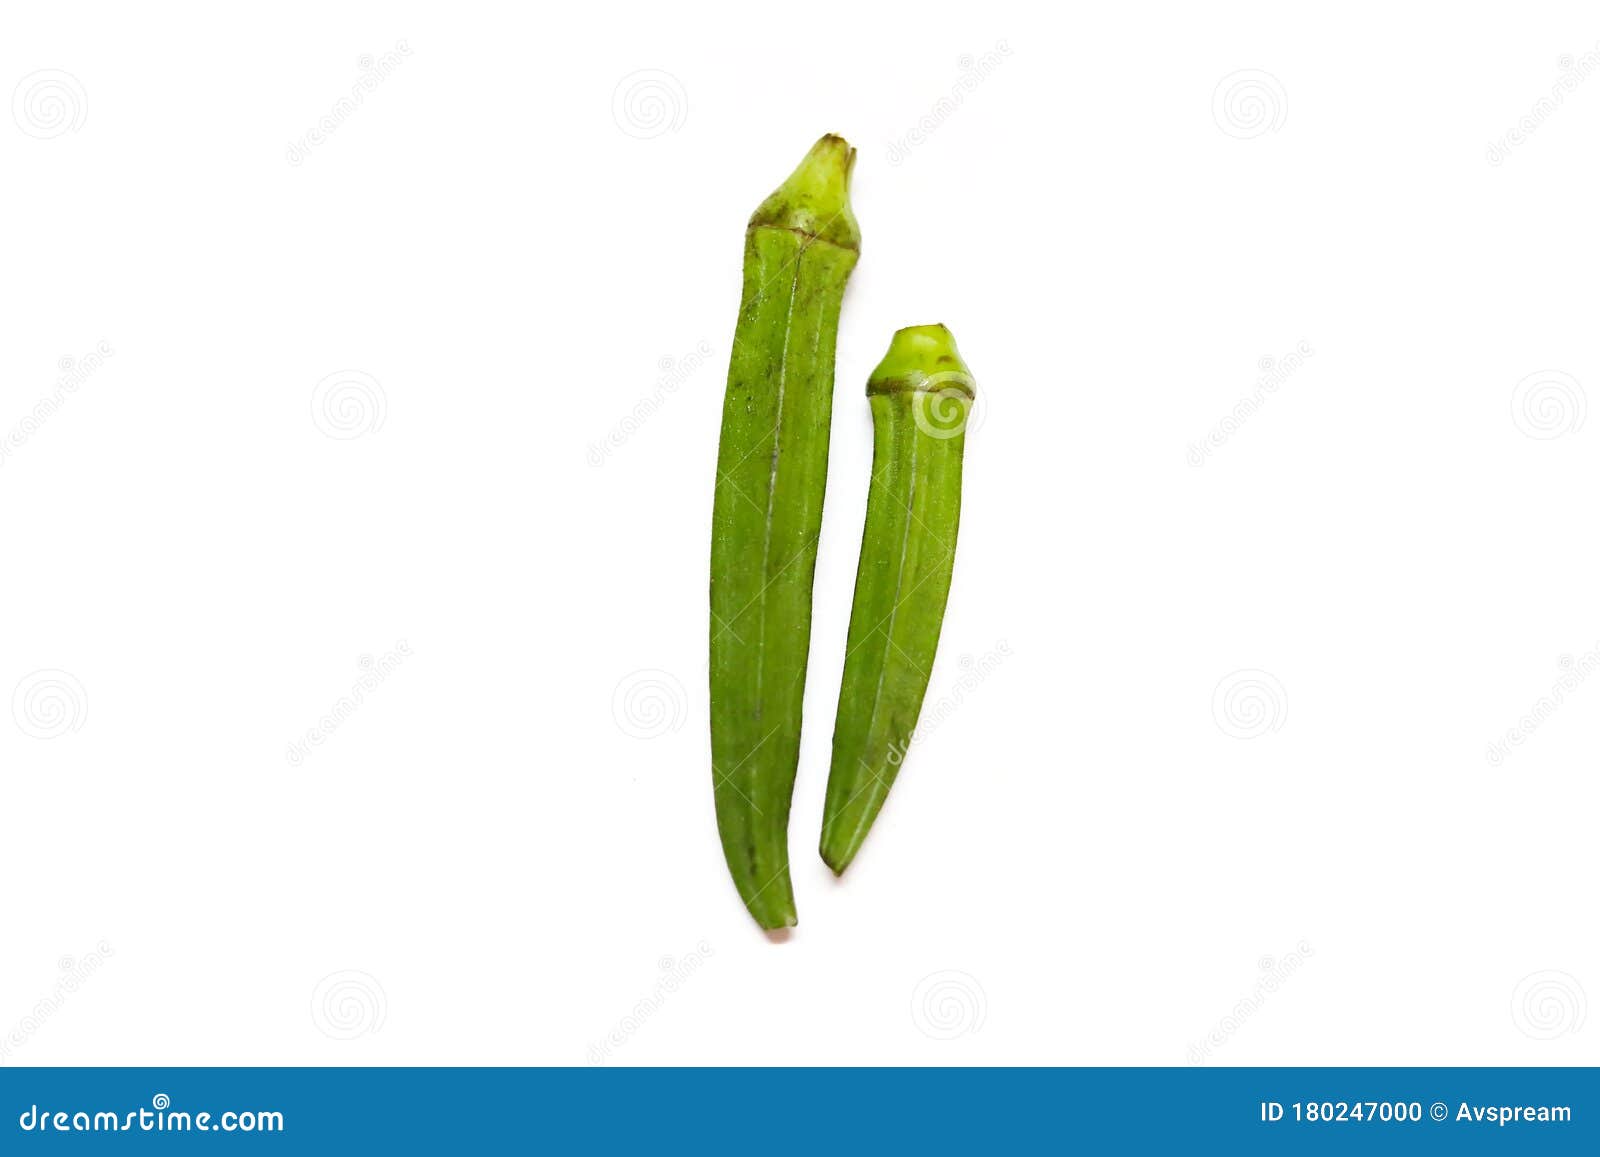 Green Lady Fingers Or Okra Vegetable On White Background Stock Photo Image Of Okra Fresh 180247000